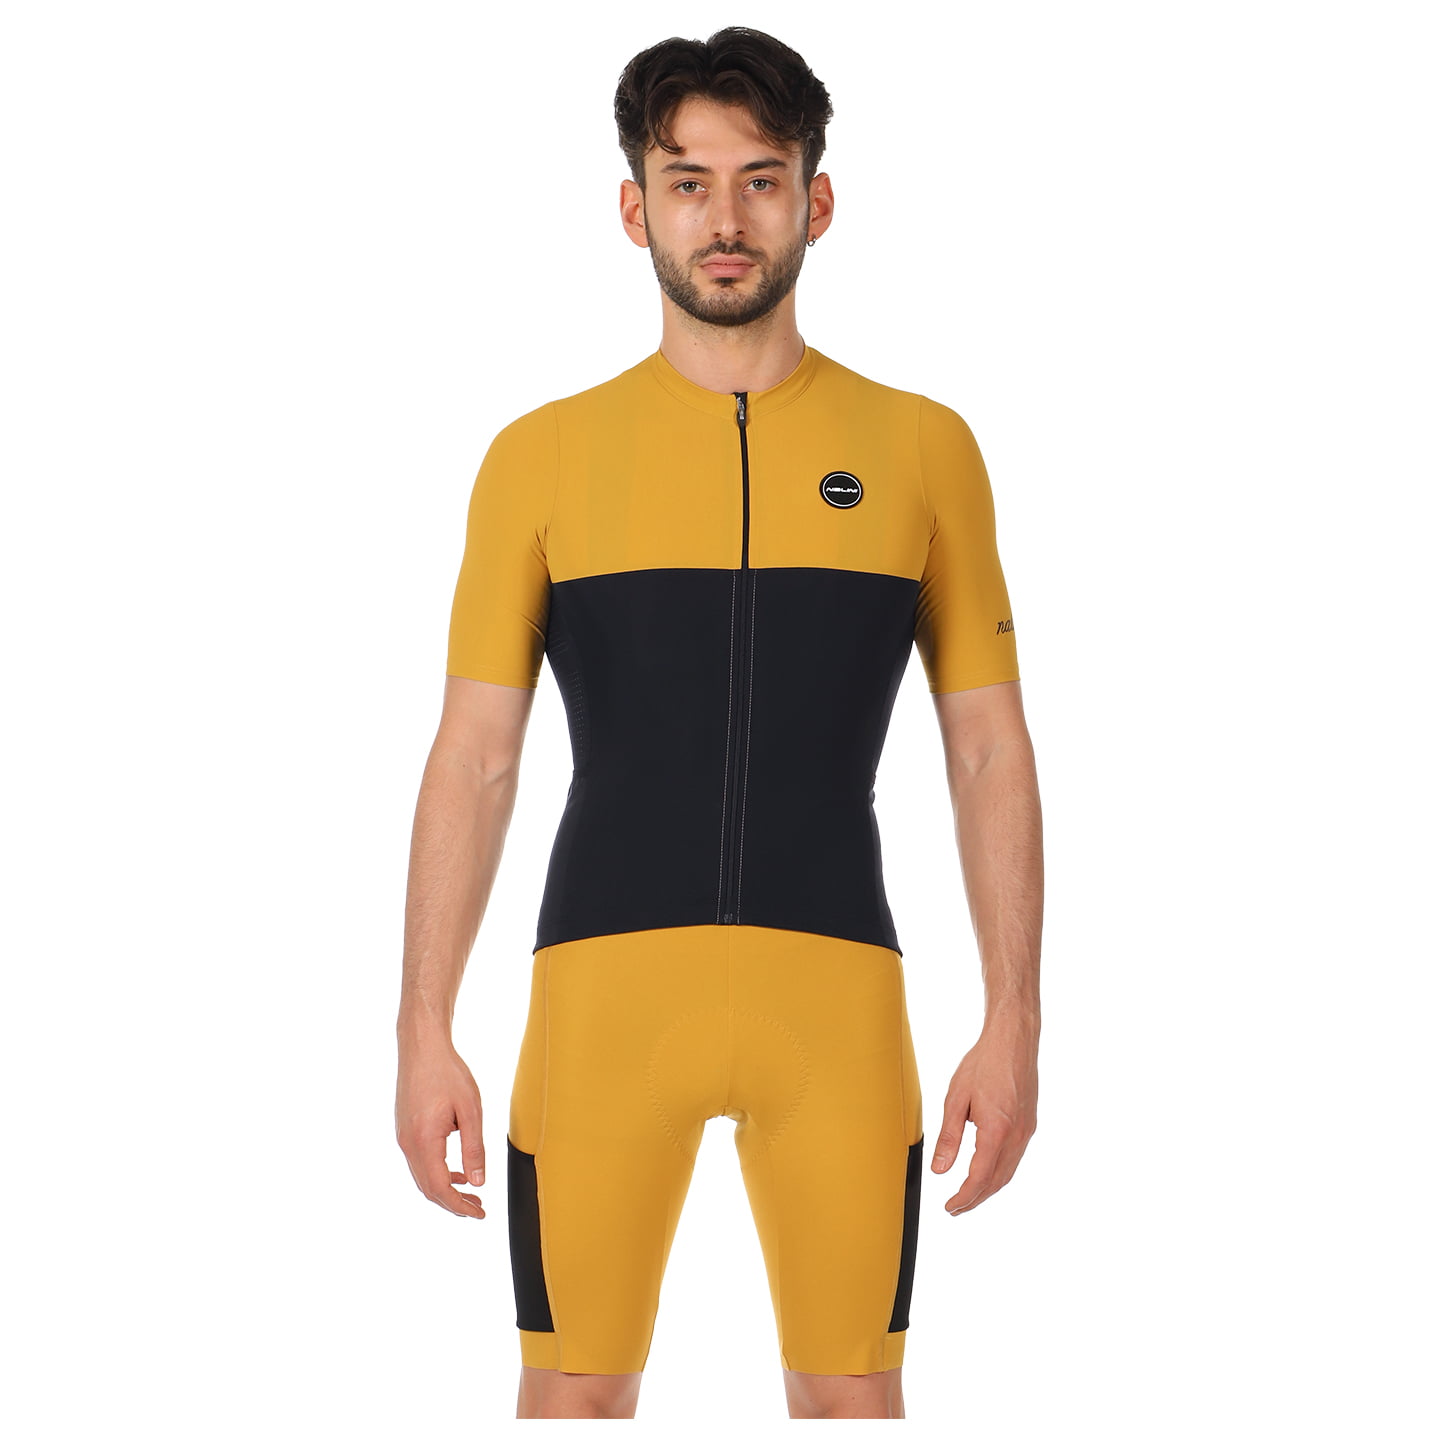 NALINI Sun Cover Set (cycling jersey + cycling shorts) Set (2 pieces), for men